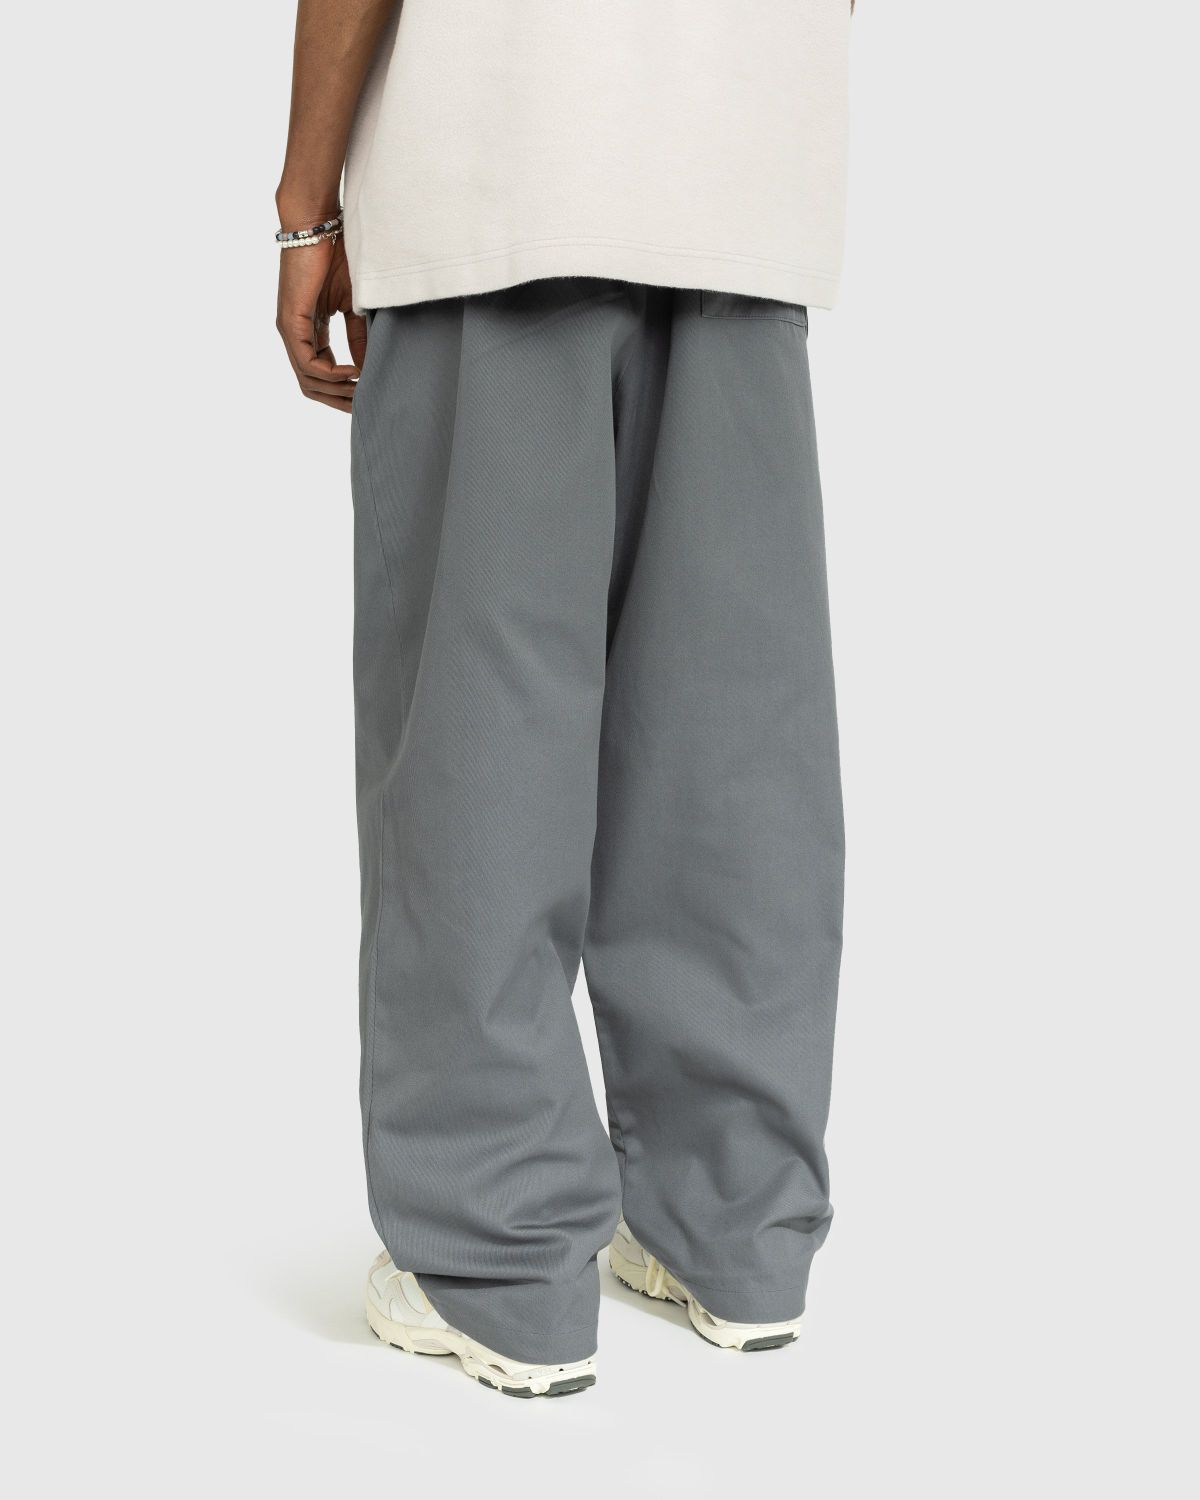 Acne Studios – Cotton Trousers Grey - Pants - Grey - Image 3